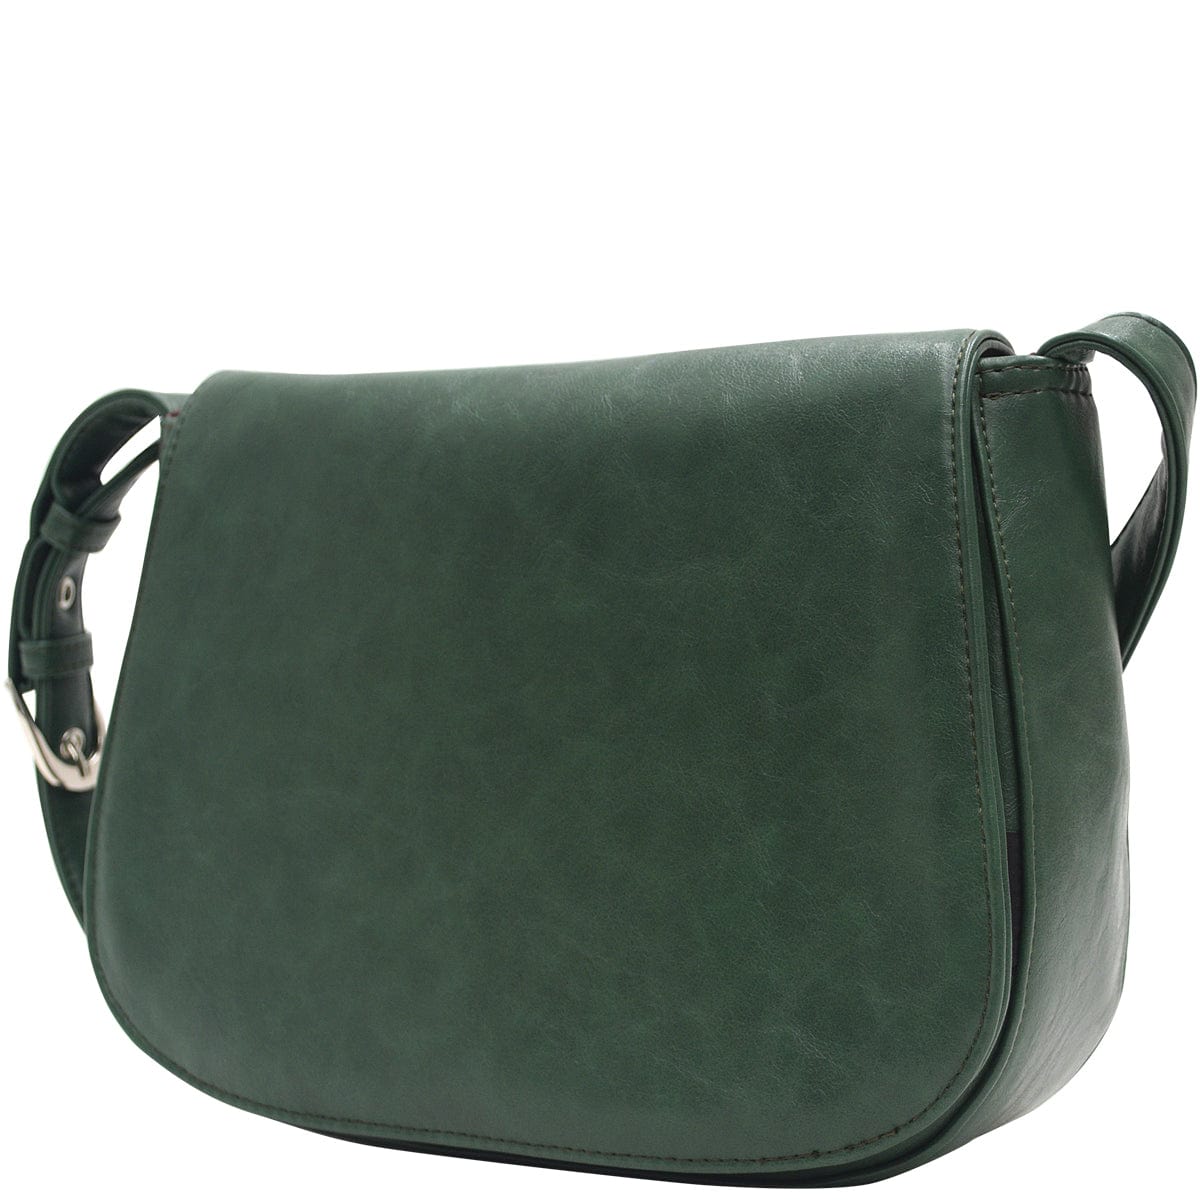 Little Beth Bag - Emerald Leather Look